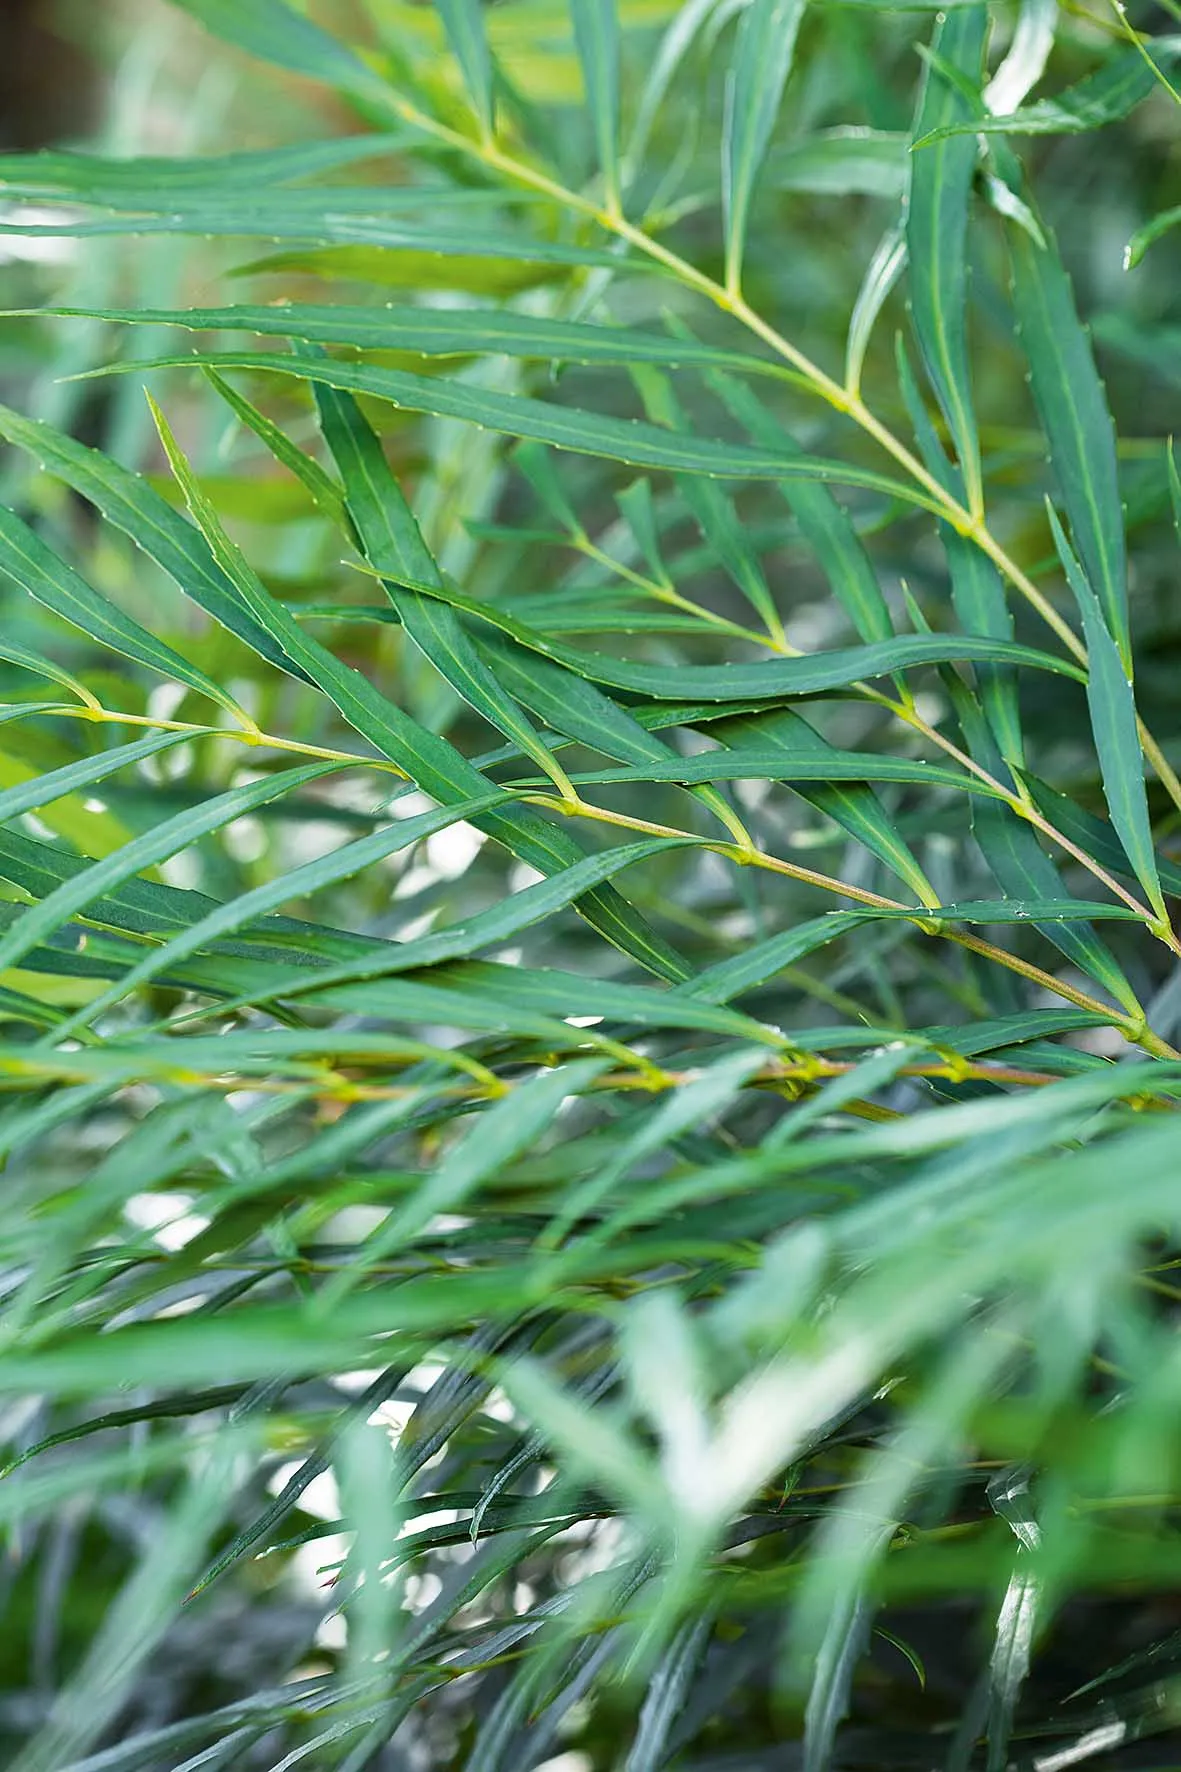 The pencil-thin evergreen leaves of Mahonia eurybracteata subsp. ganpinesis ‘Soft Caress'